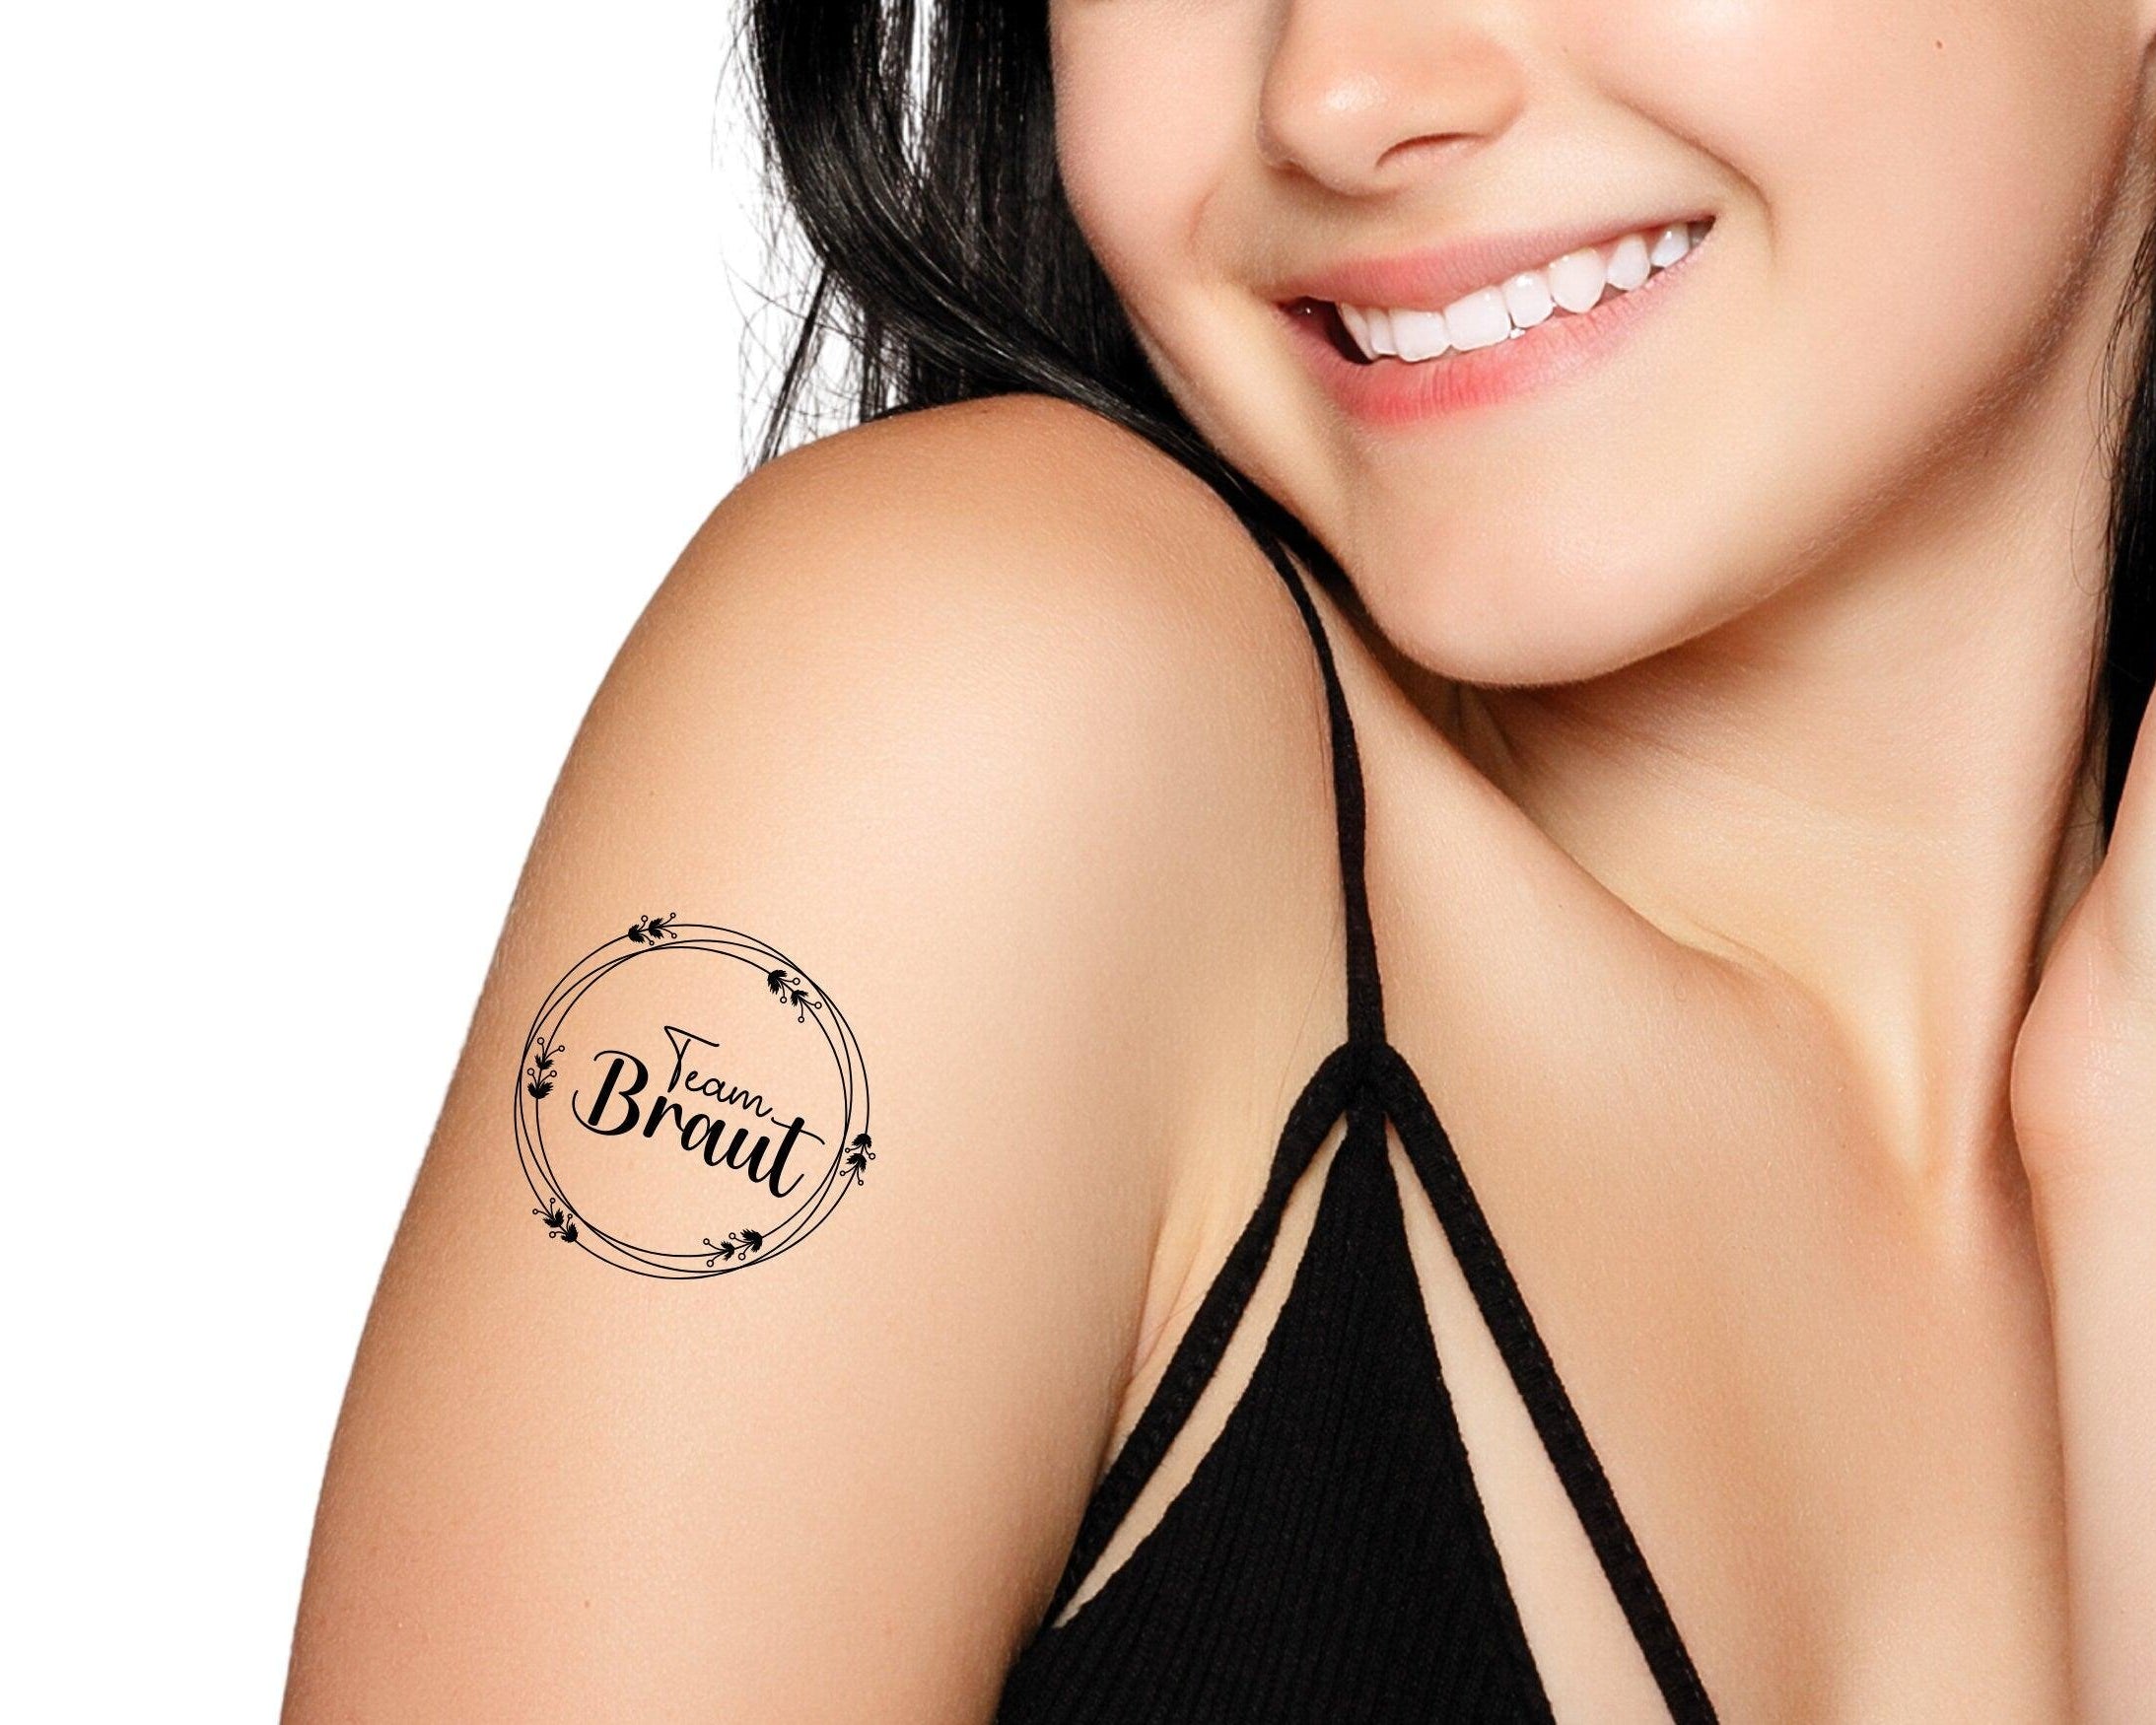 Tattoo | personalisiert | temporär | JGA Team Braut - Roo's Gift Shop